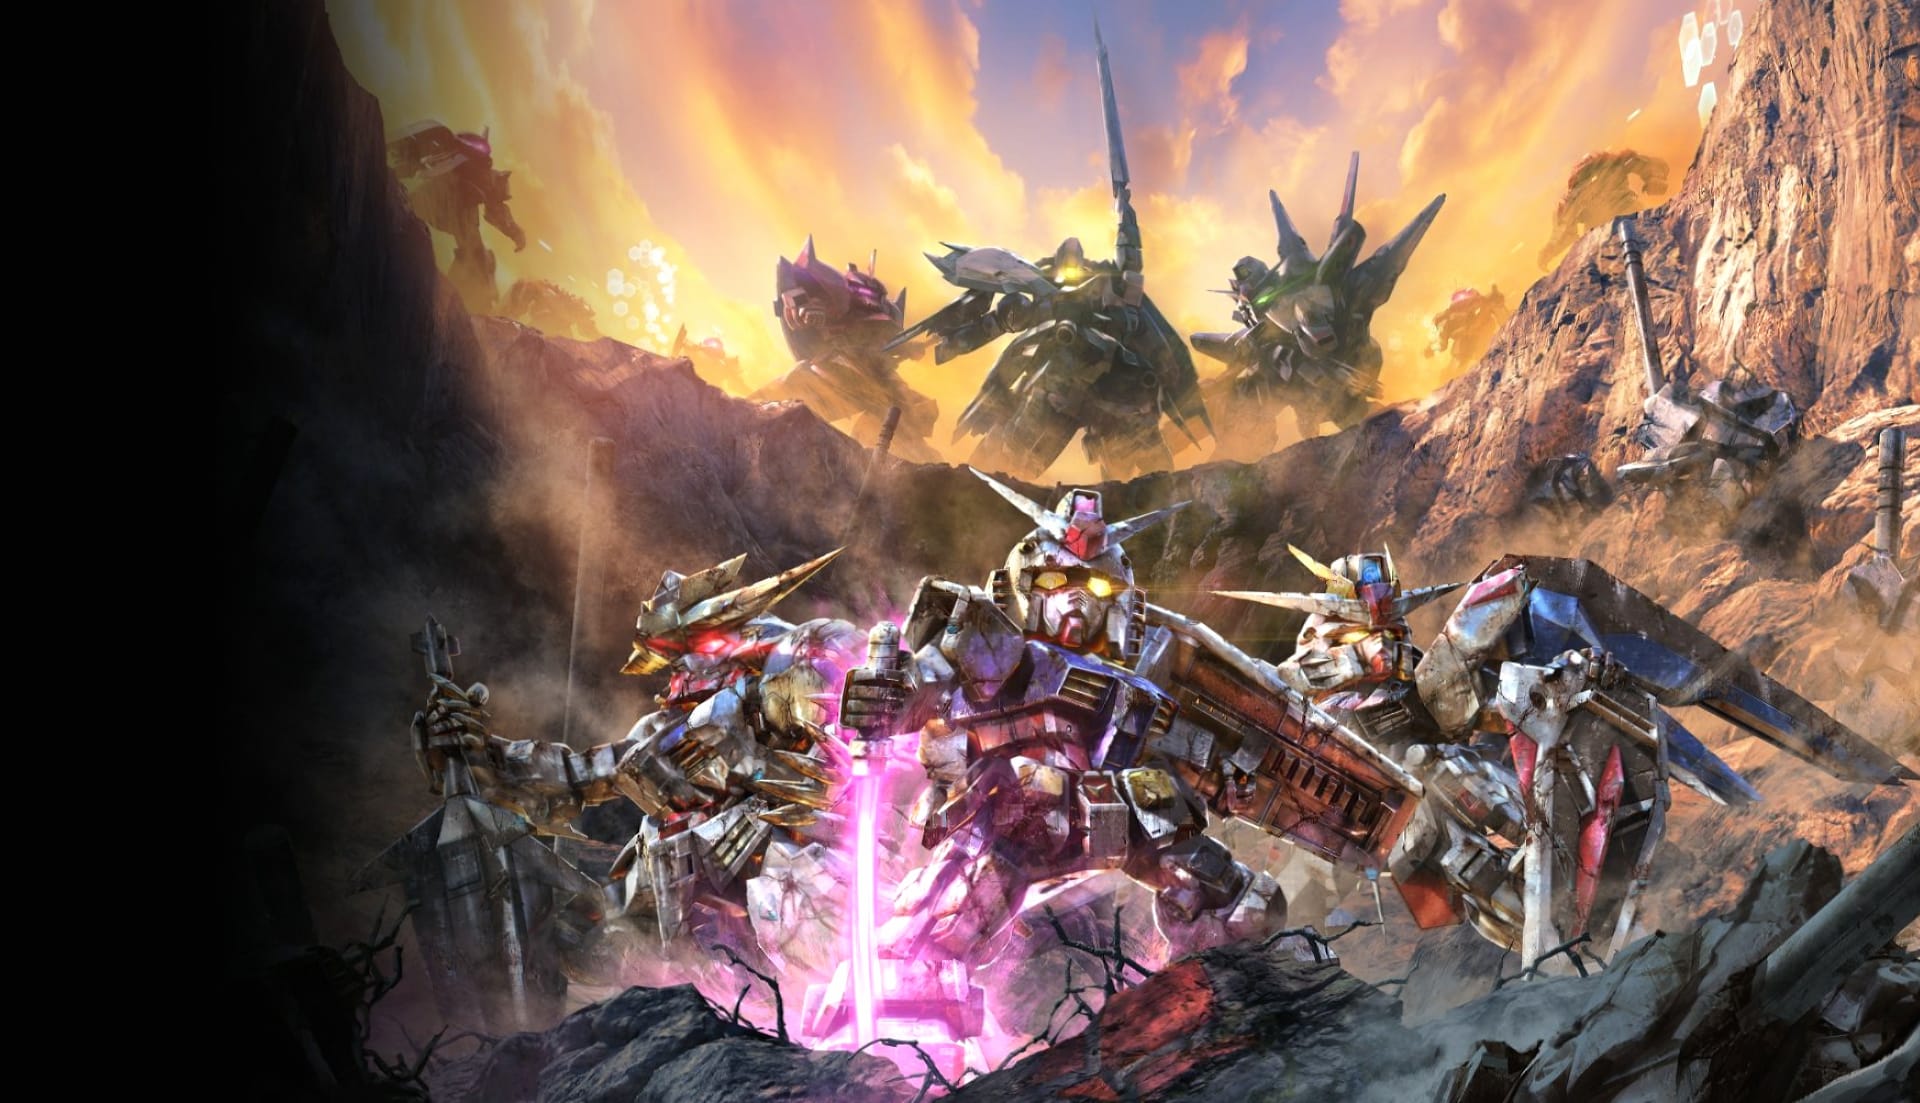 SD Gundam Battle Alliance at 1024 x 1024 iPad size wallpapers HD quality